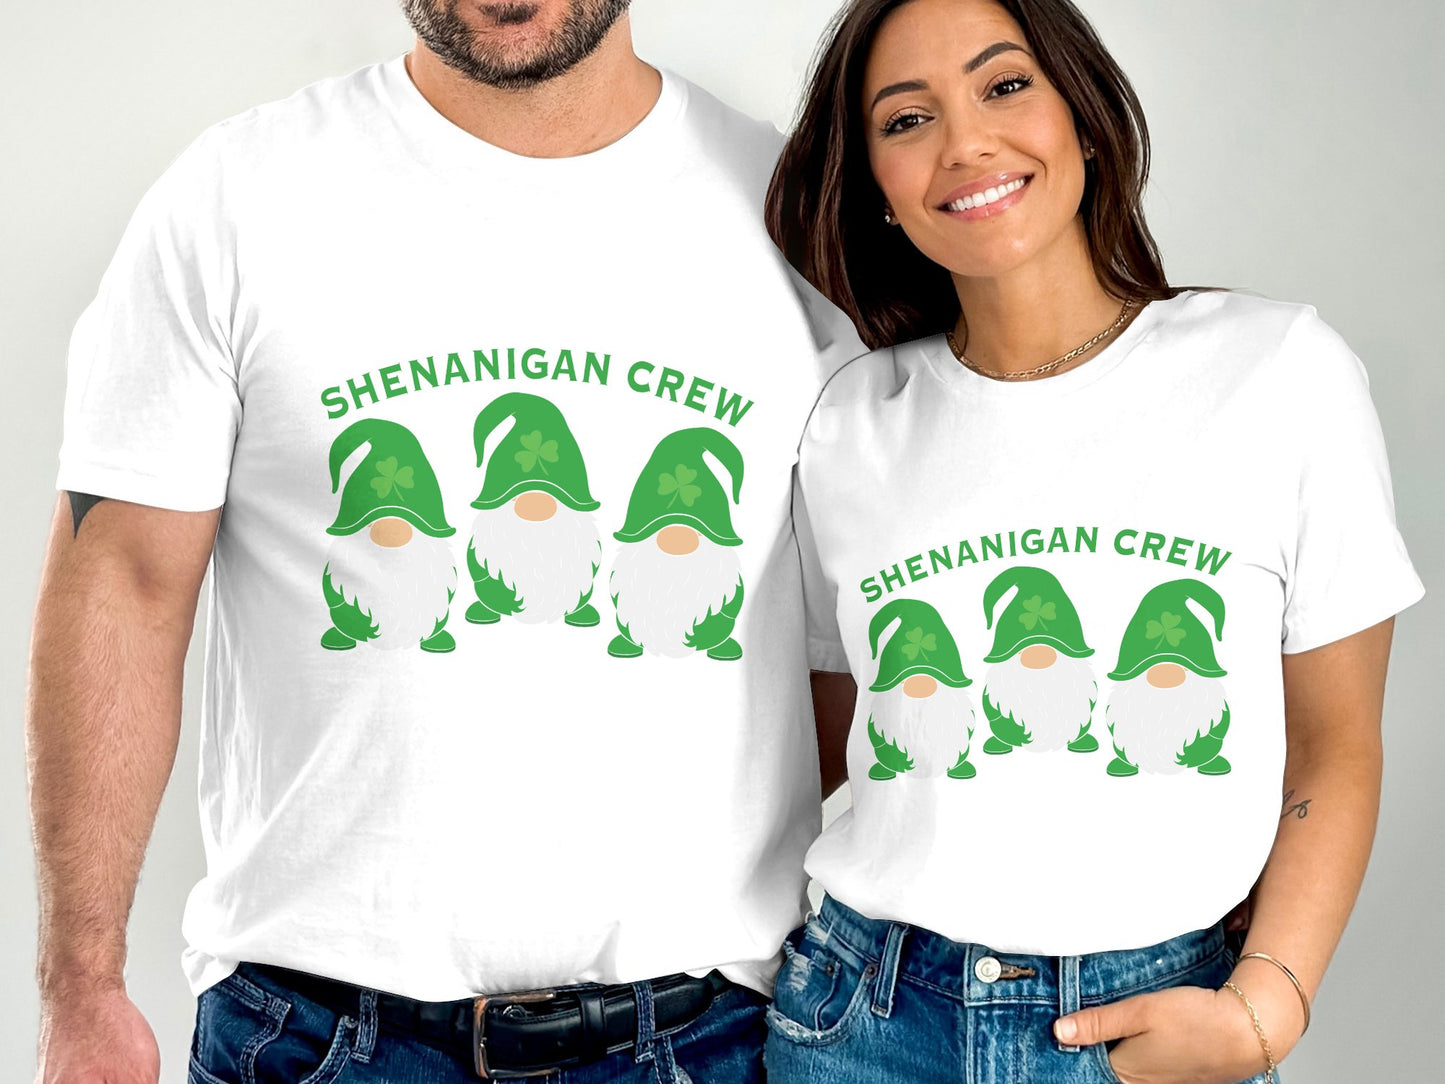 Shenanigan Crew (St. Patrick's Day T-Shirt)